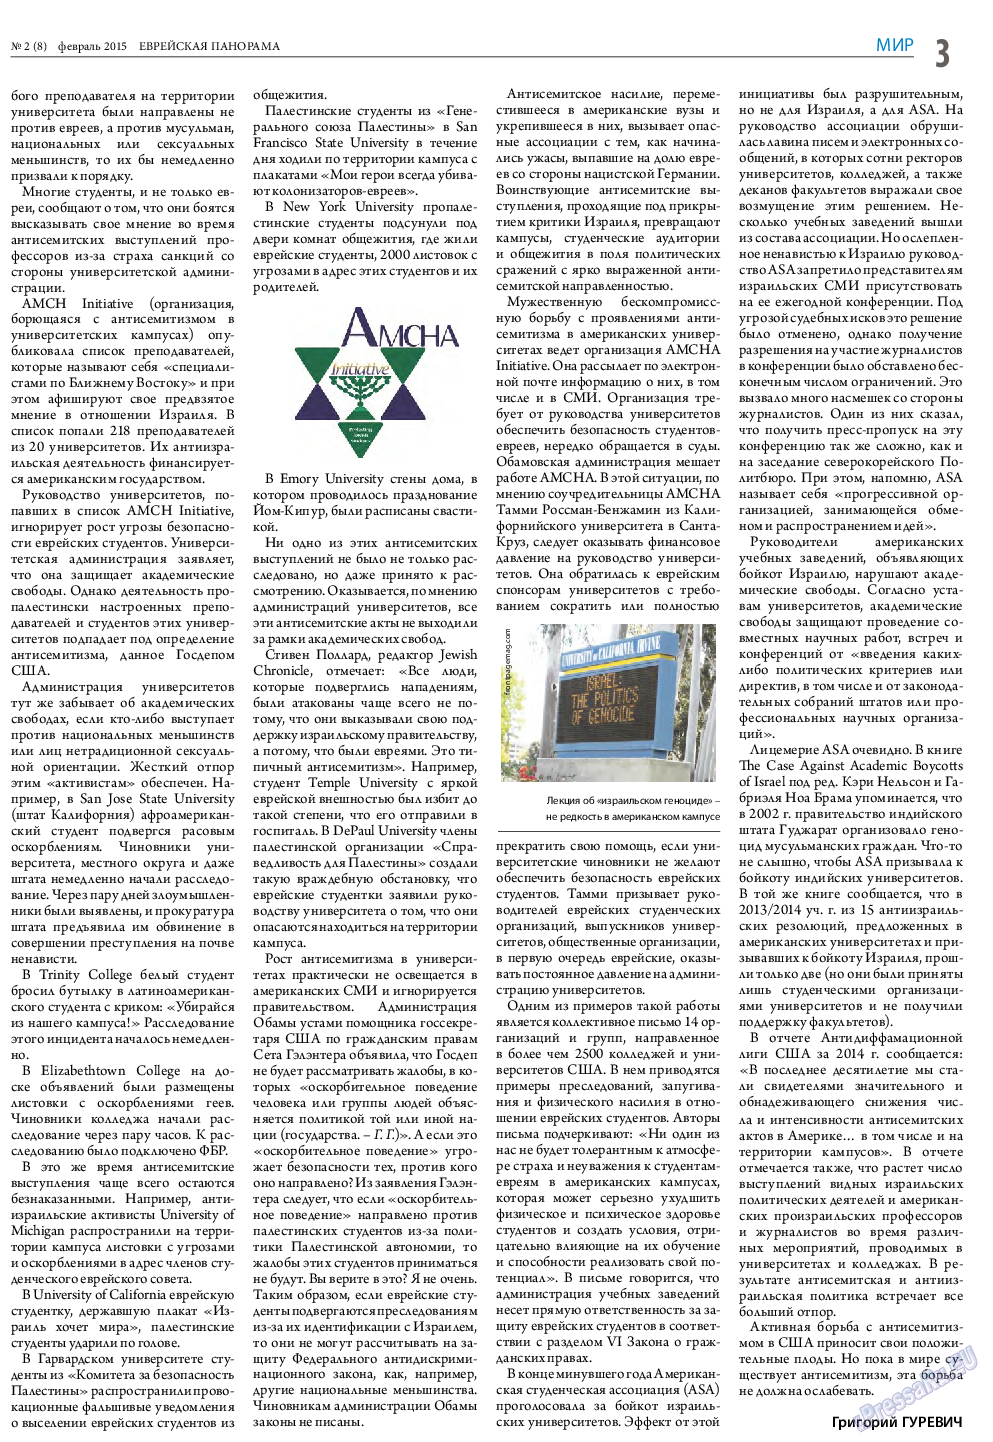 Еврейская панорама, газета. 2015 №2 стр.3